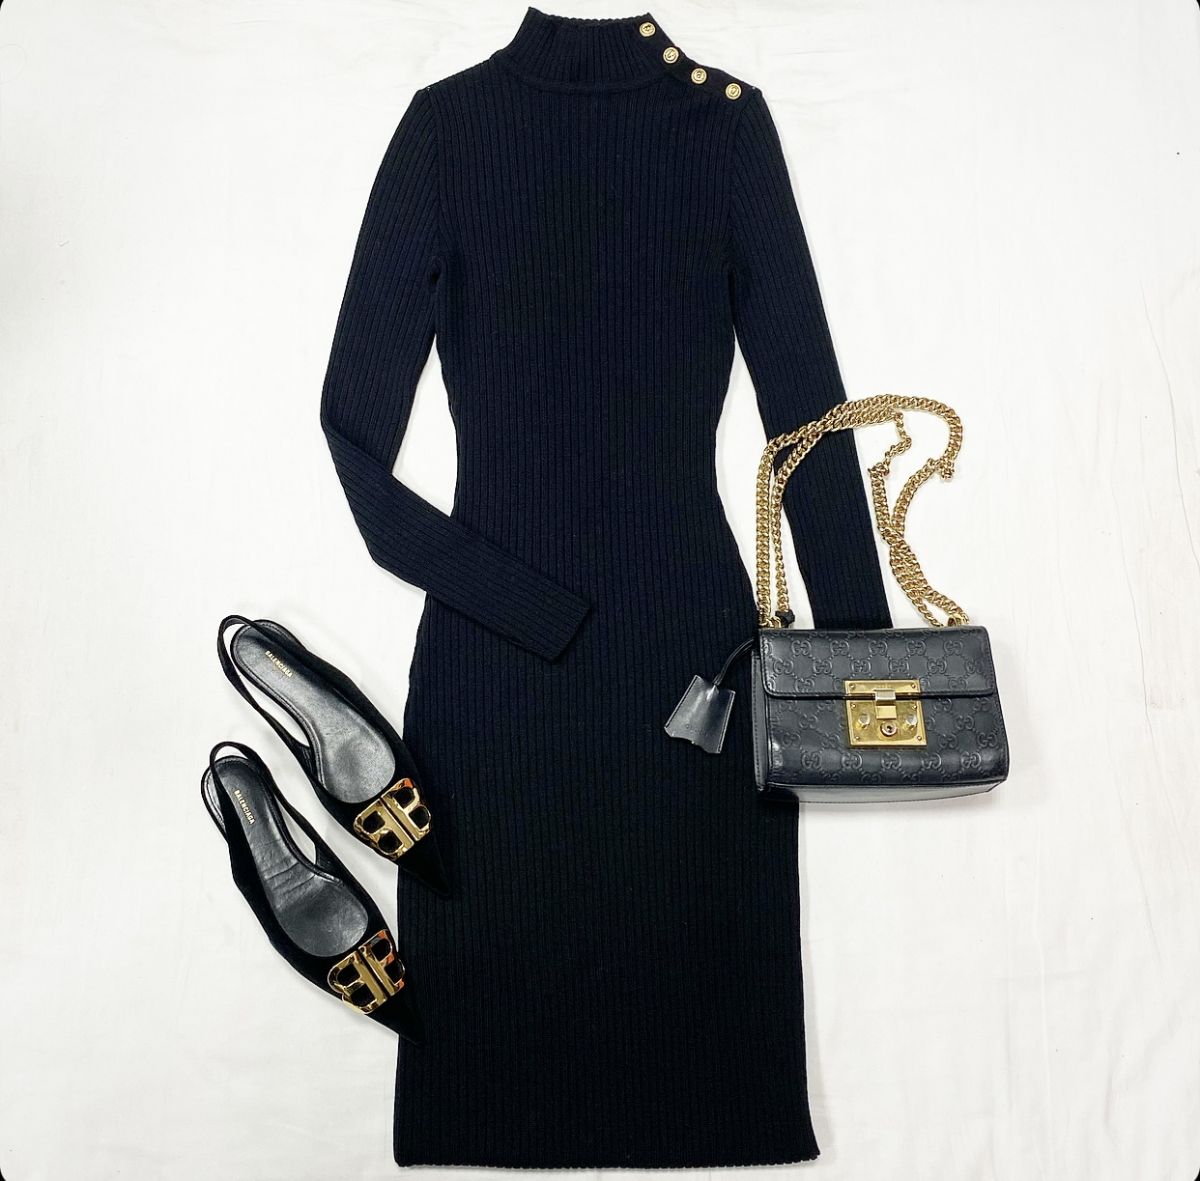 Платье Balmain размер 36 цена 23 078 руб Мюли Balenciaga размер 37 цена 38 463 руб Сумка Gucci